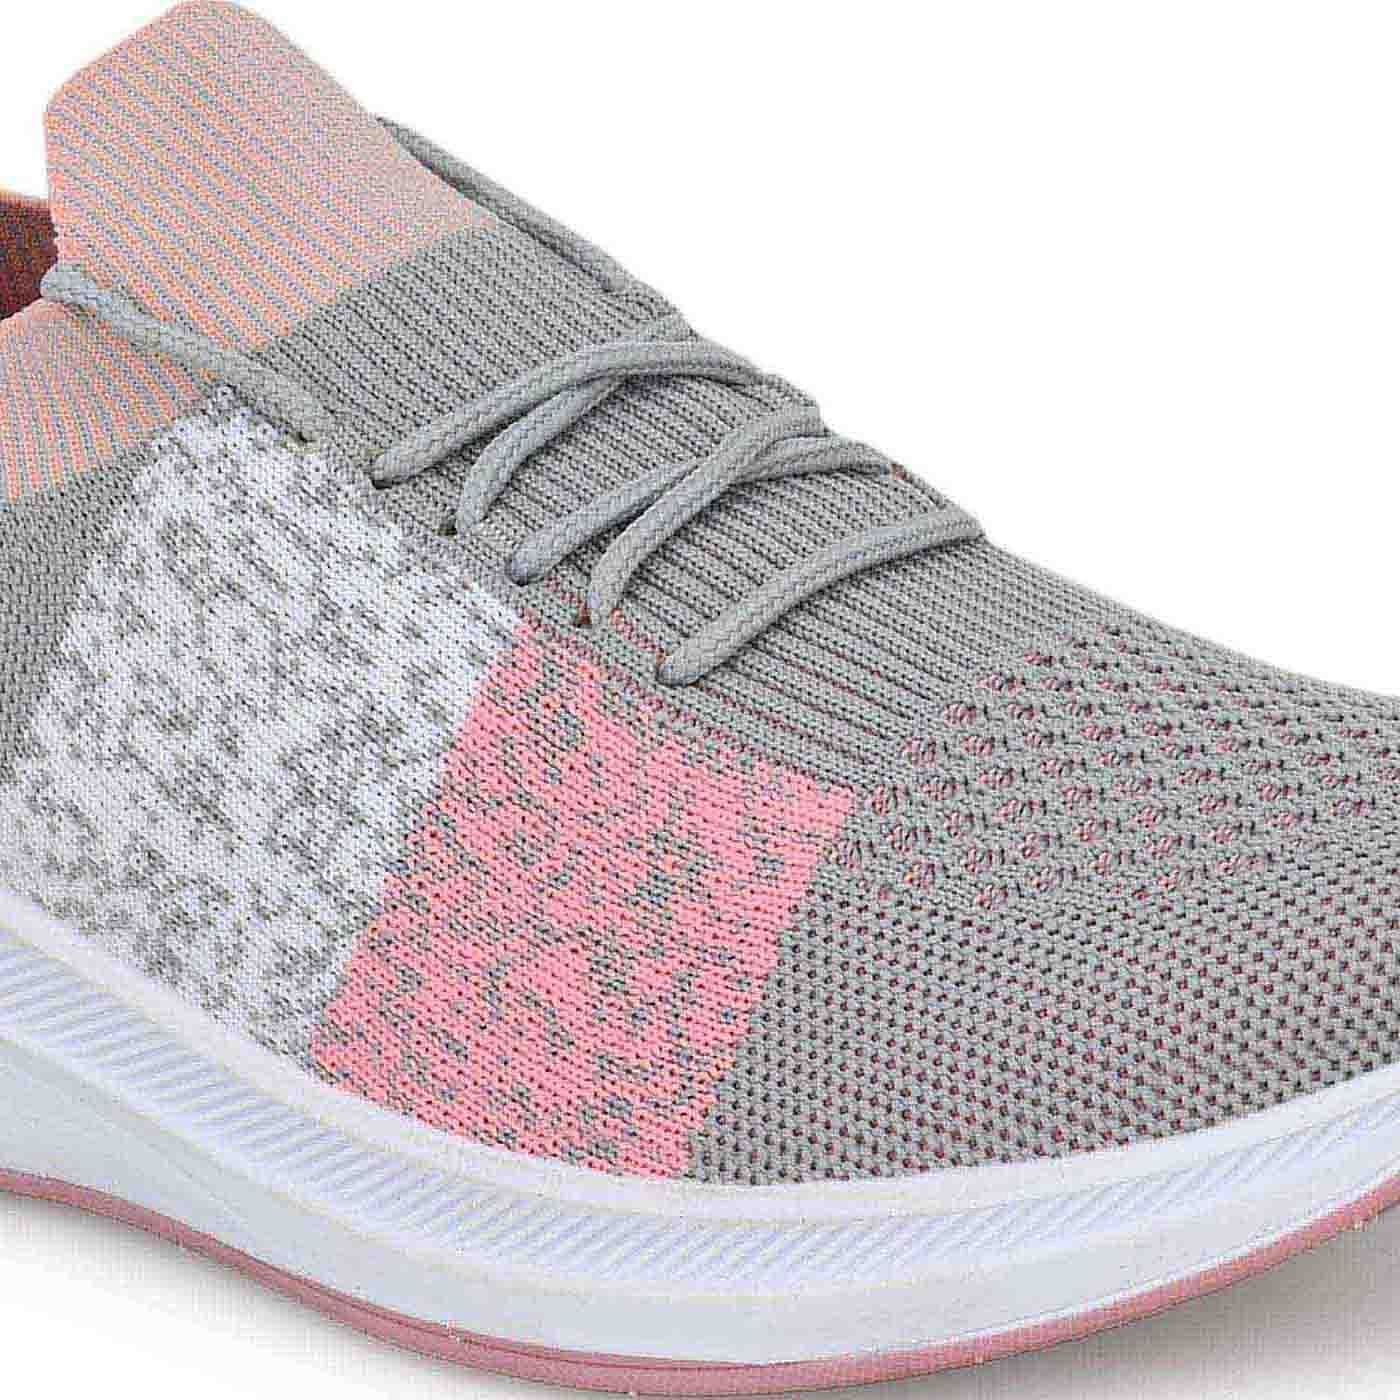 Pair-it Women's Sports Shoes-LZ-WMN SPORTS-005-Grey